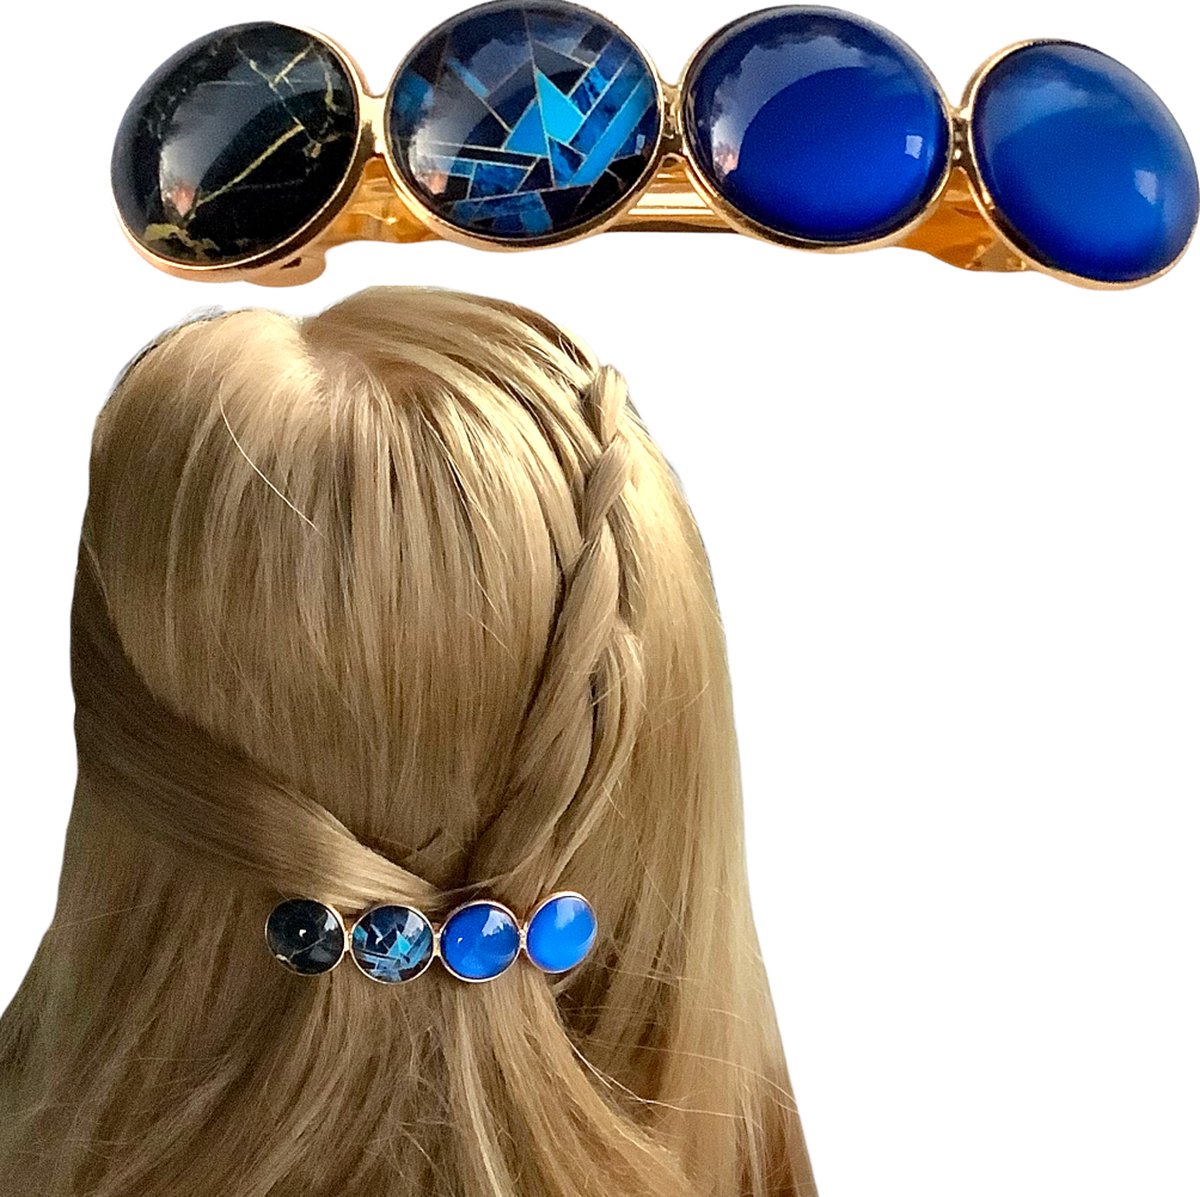 Hairpin.nu Color Hairclip XL glas cabochon goud blauw haarspeld haarclip kadotip